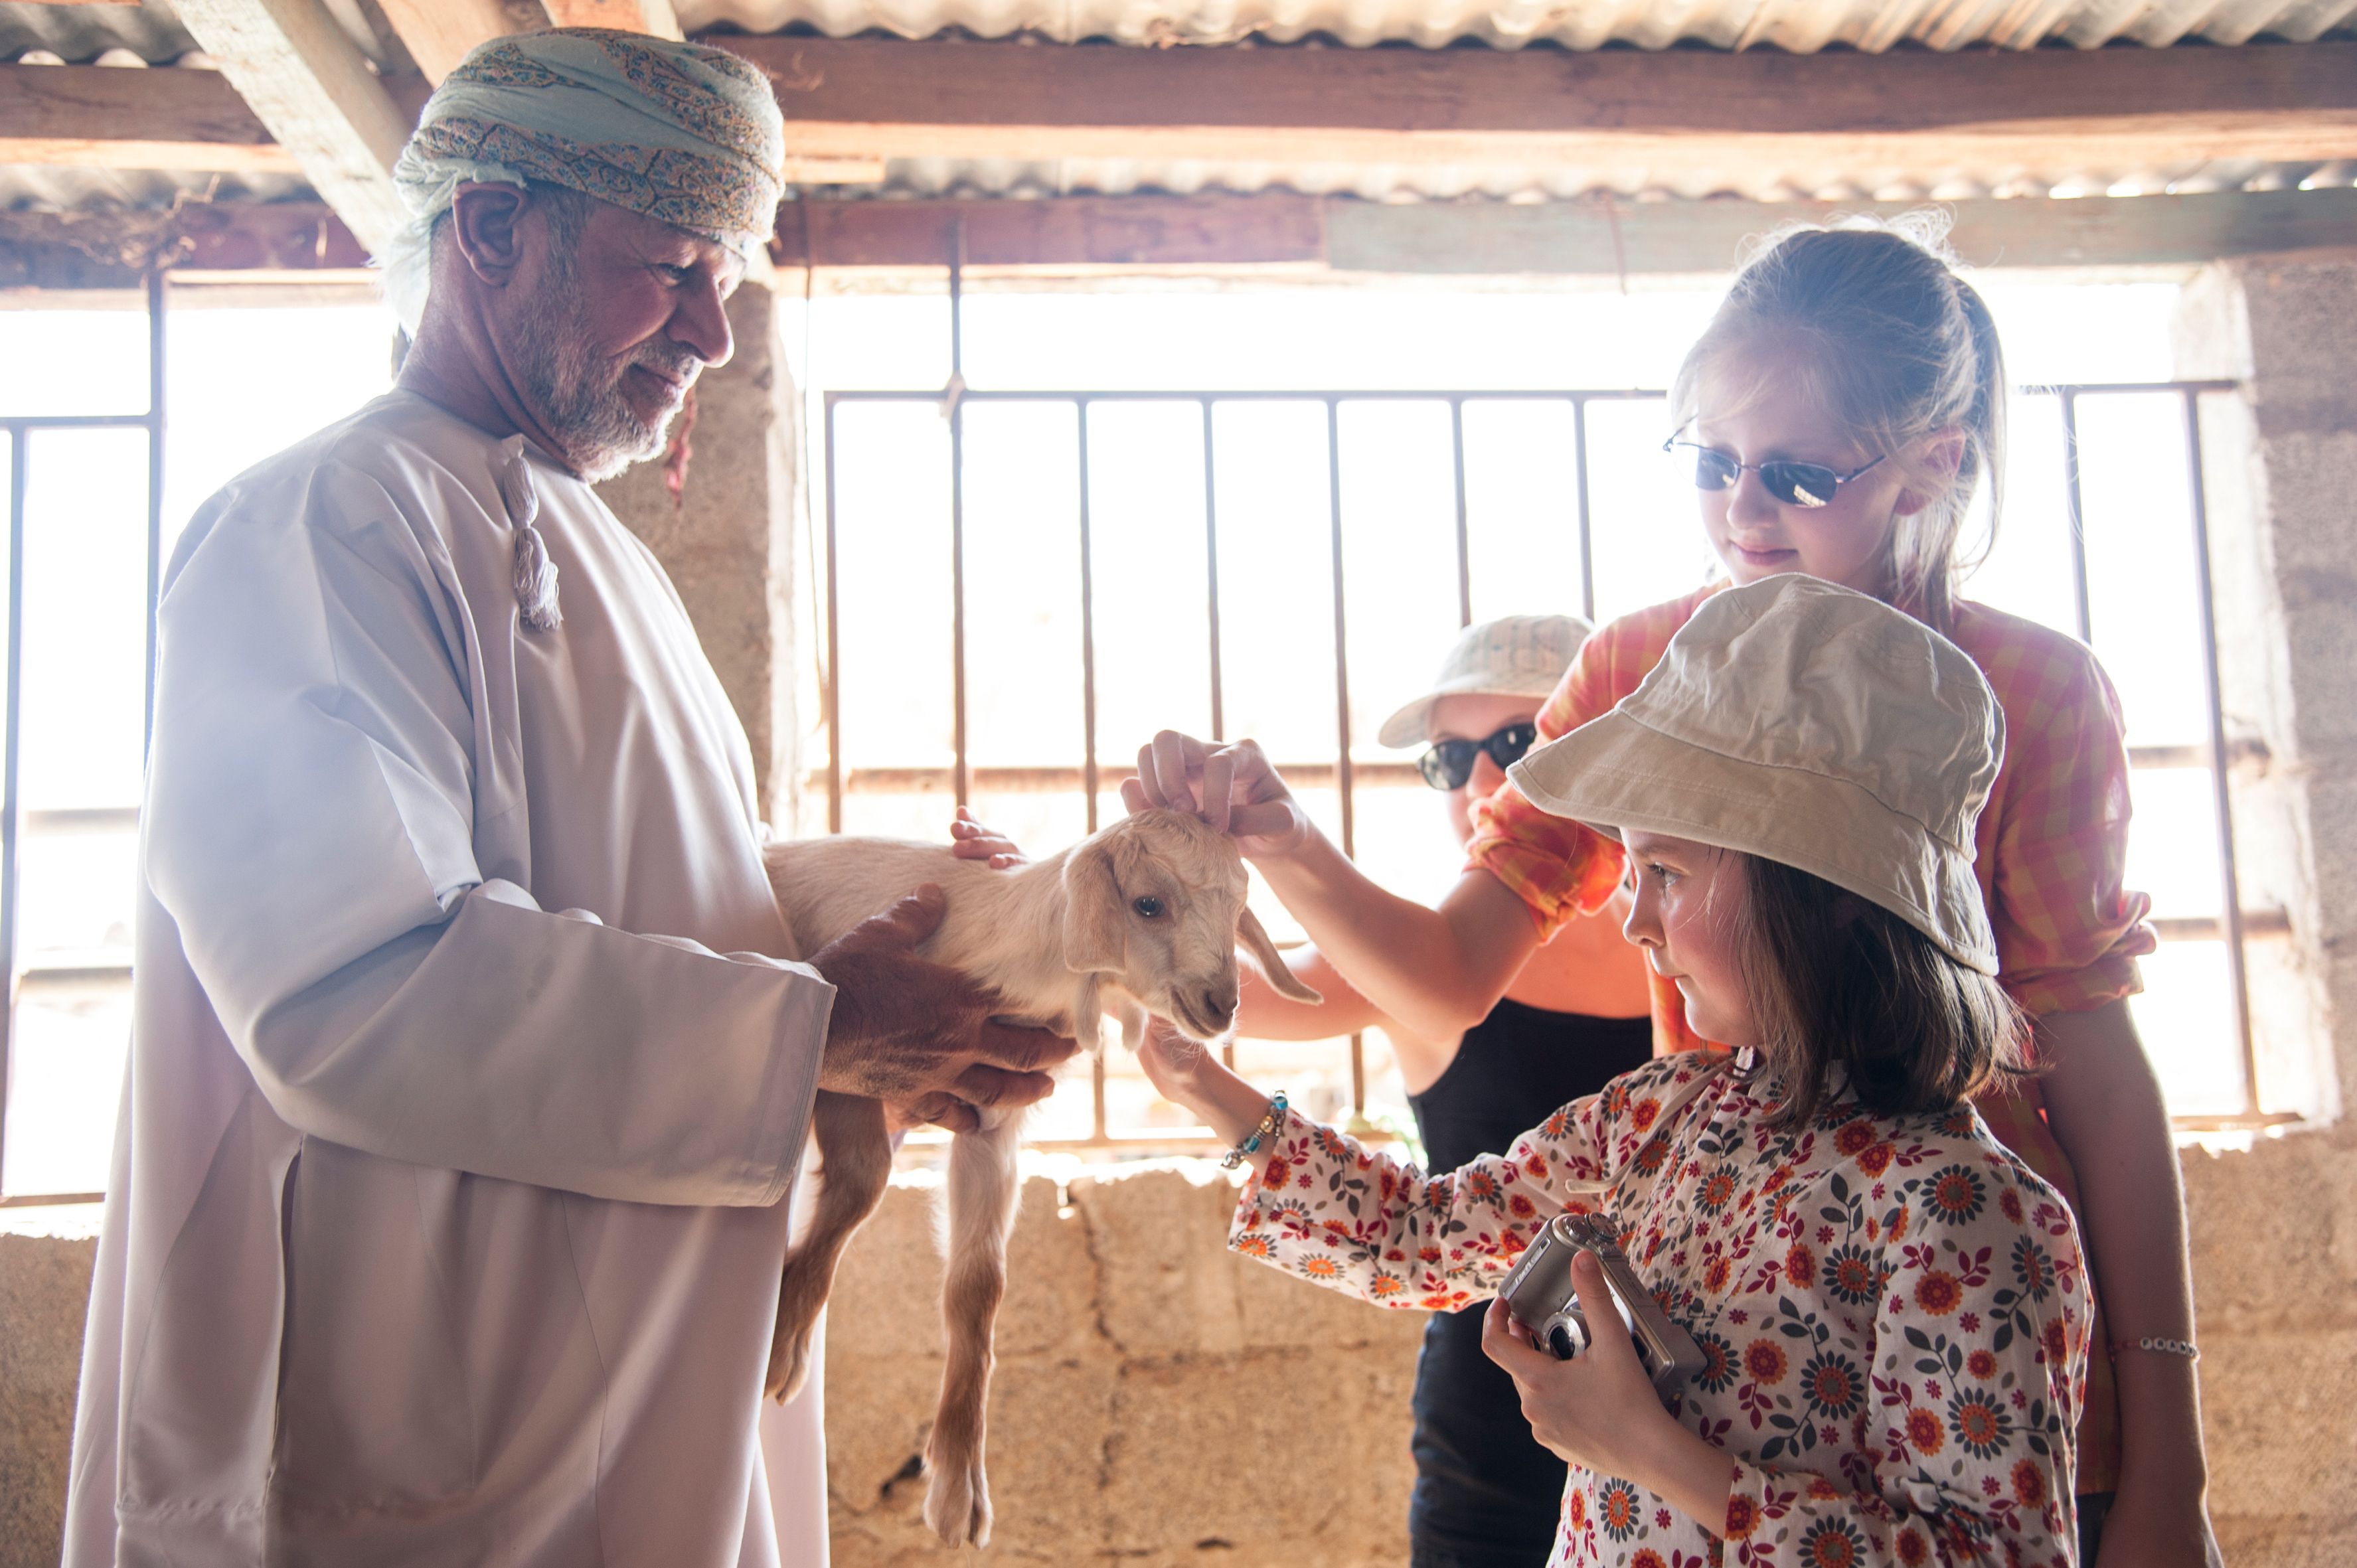 10 years tour operator For Family Reisen - Oman Familienreise - children pet a goat